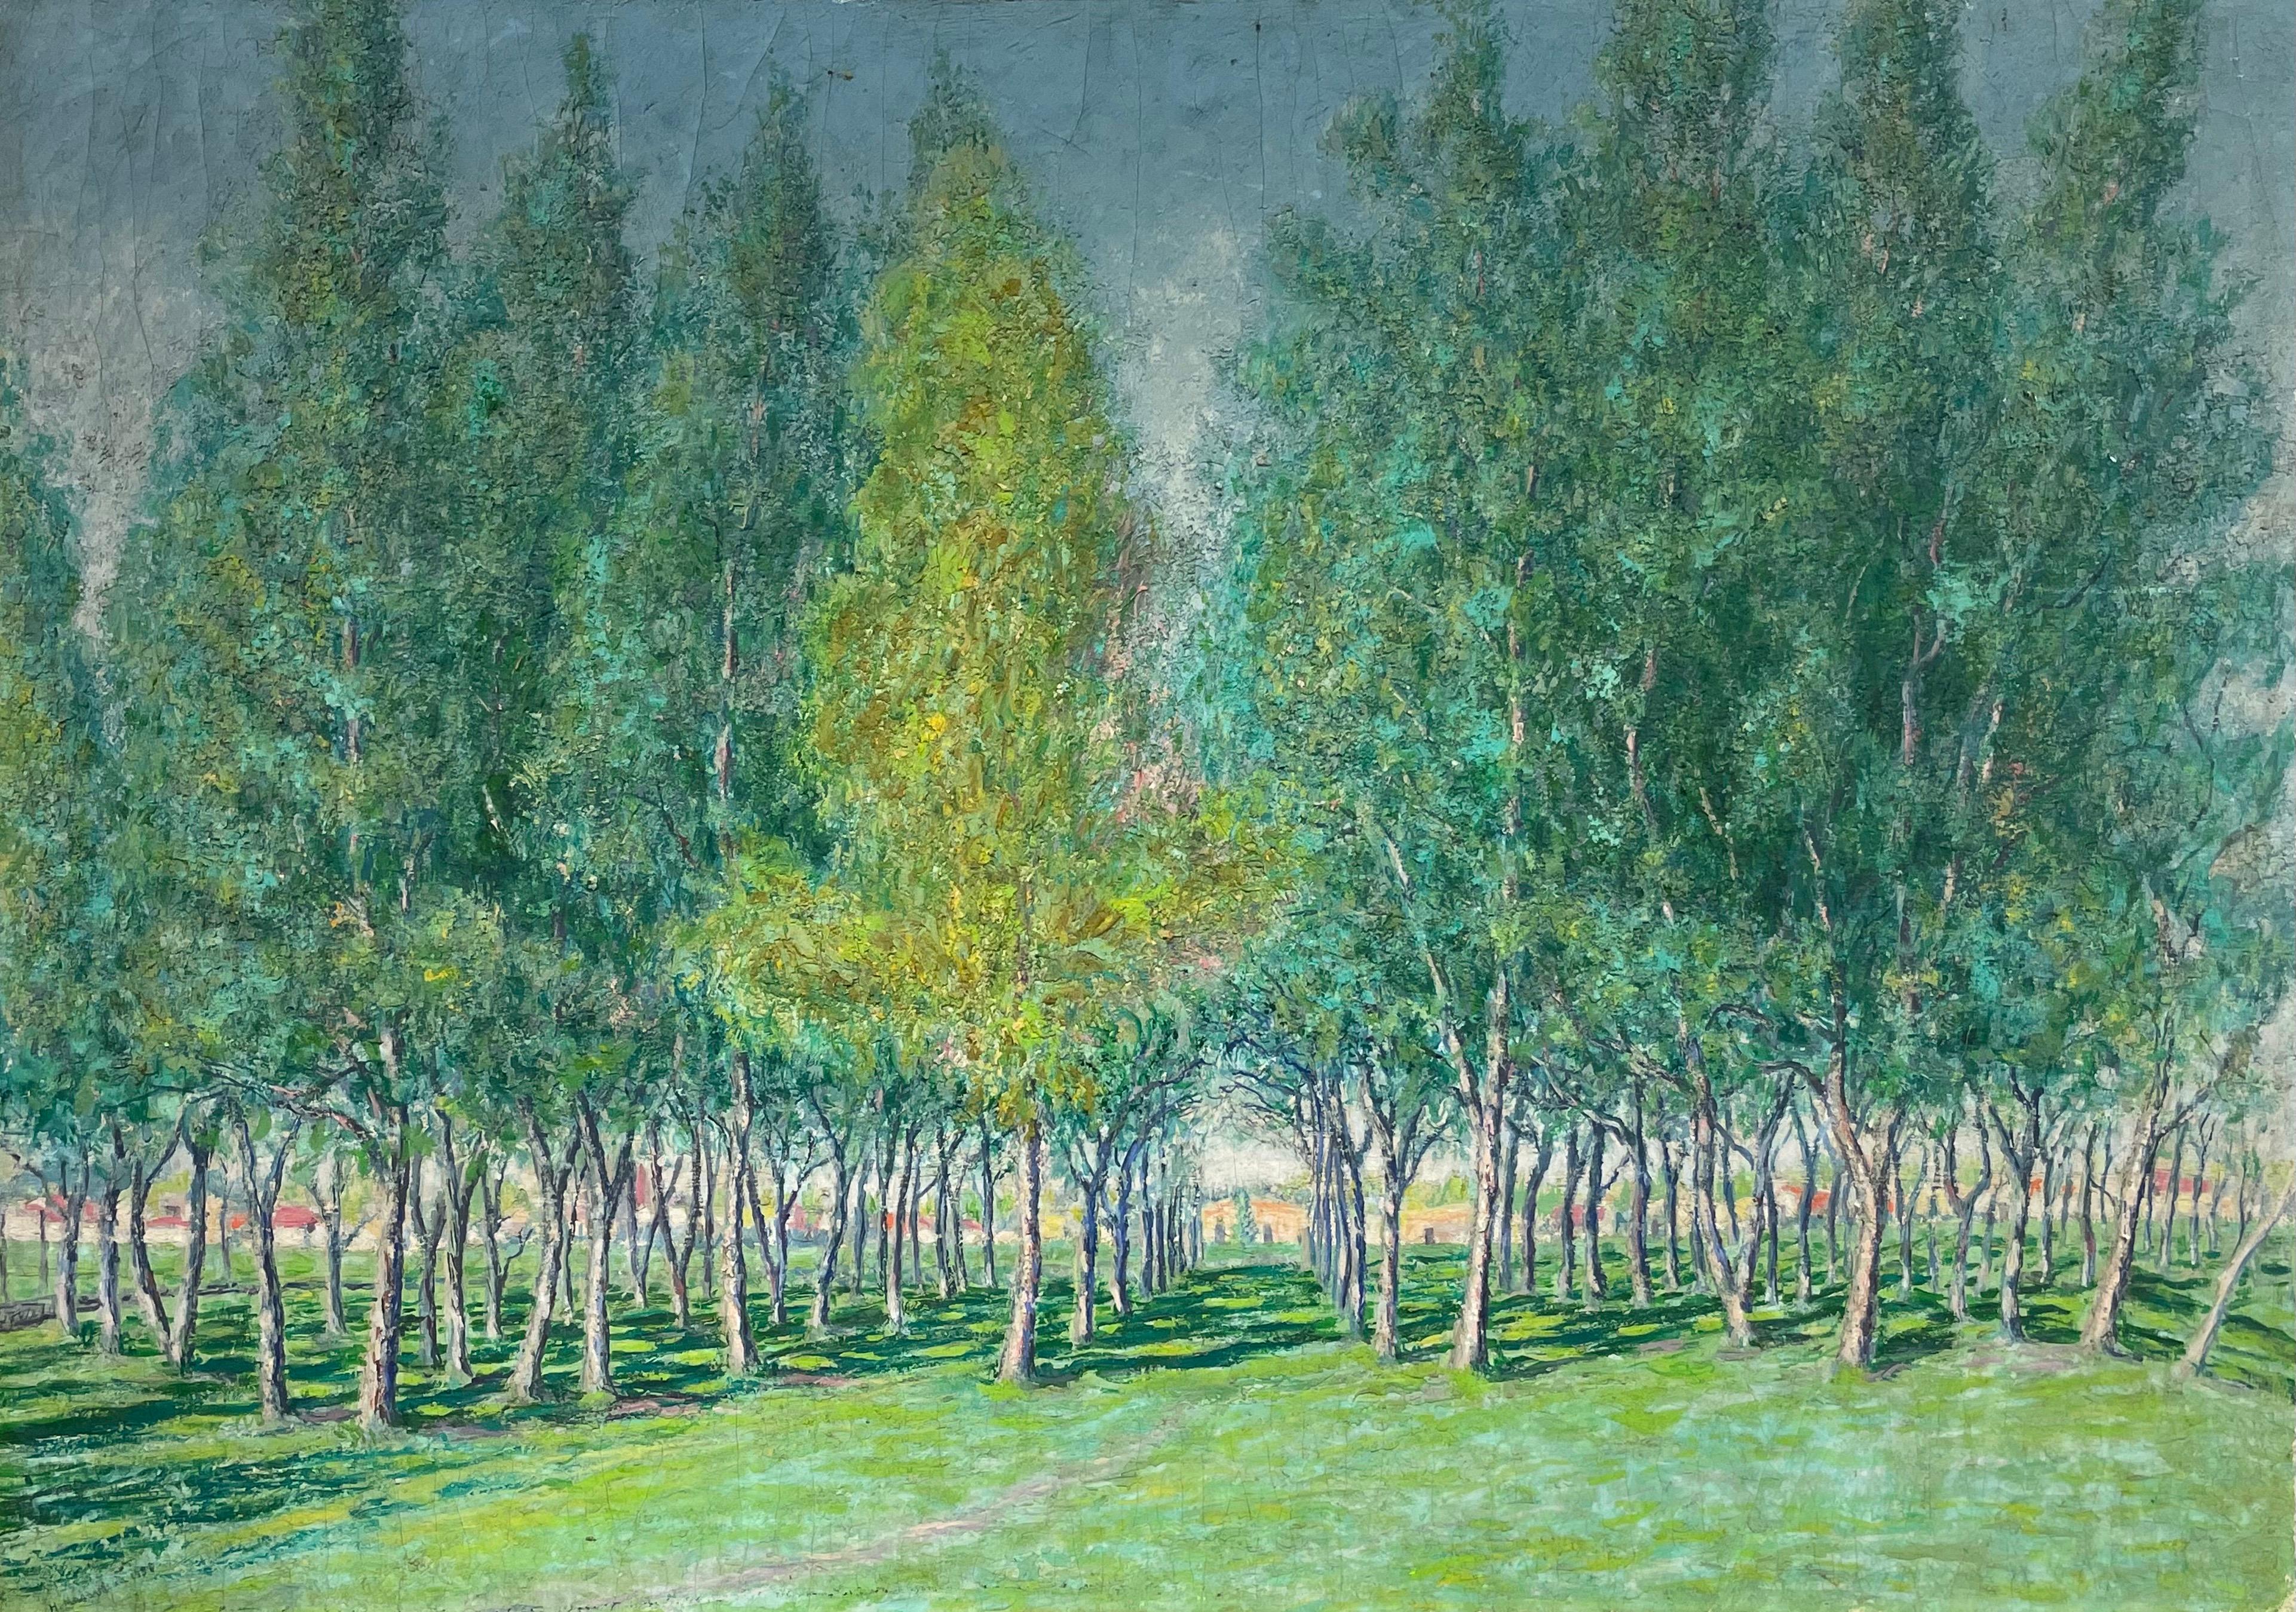 Très grande huile impressionniste française des années 1930, Avenue of Green Wispy Trees - Impressionnisme Painting par 1930's French Impressionist